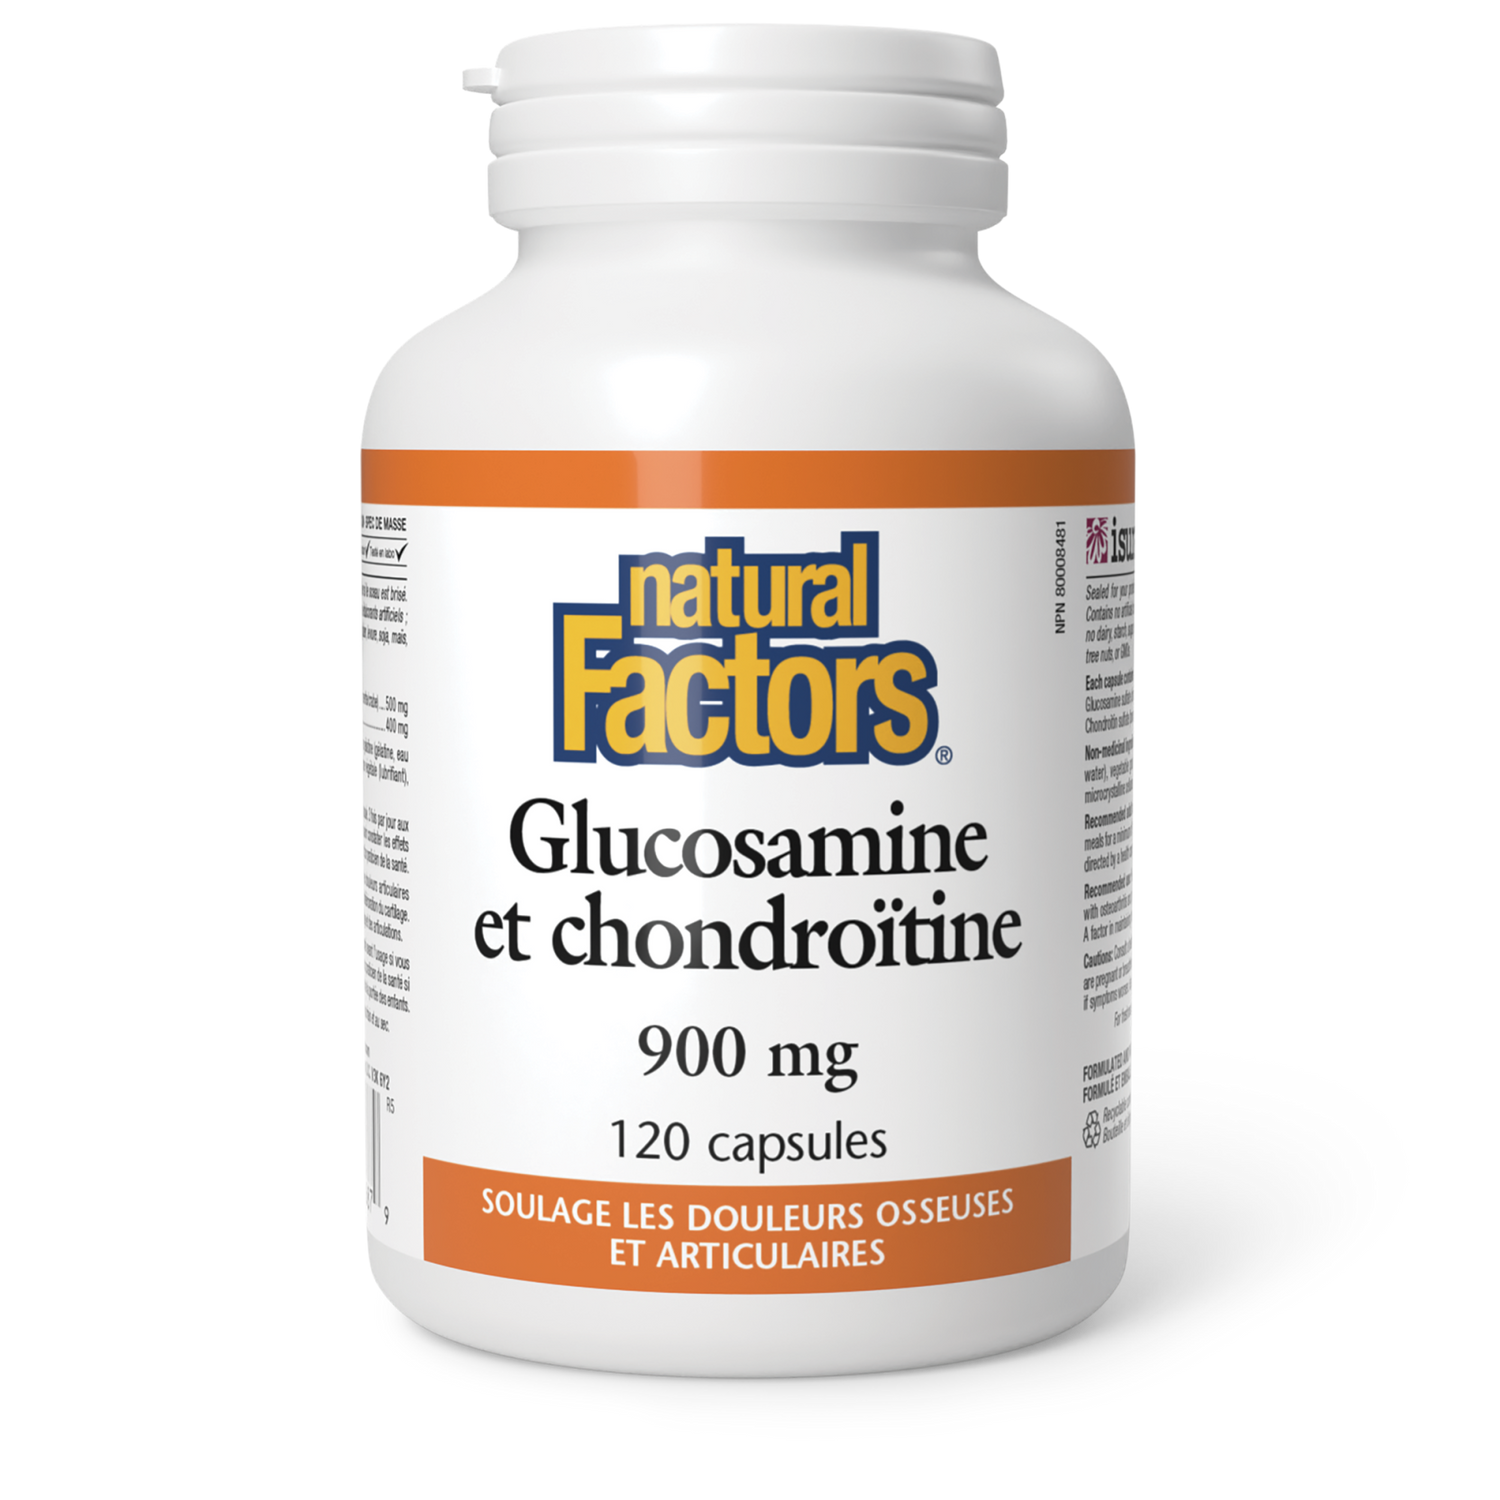 Glucosamine et chondroïtine 900 mg, Natural Factors|v|image|2687